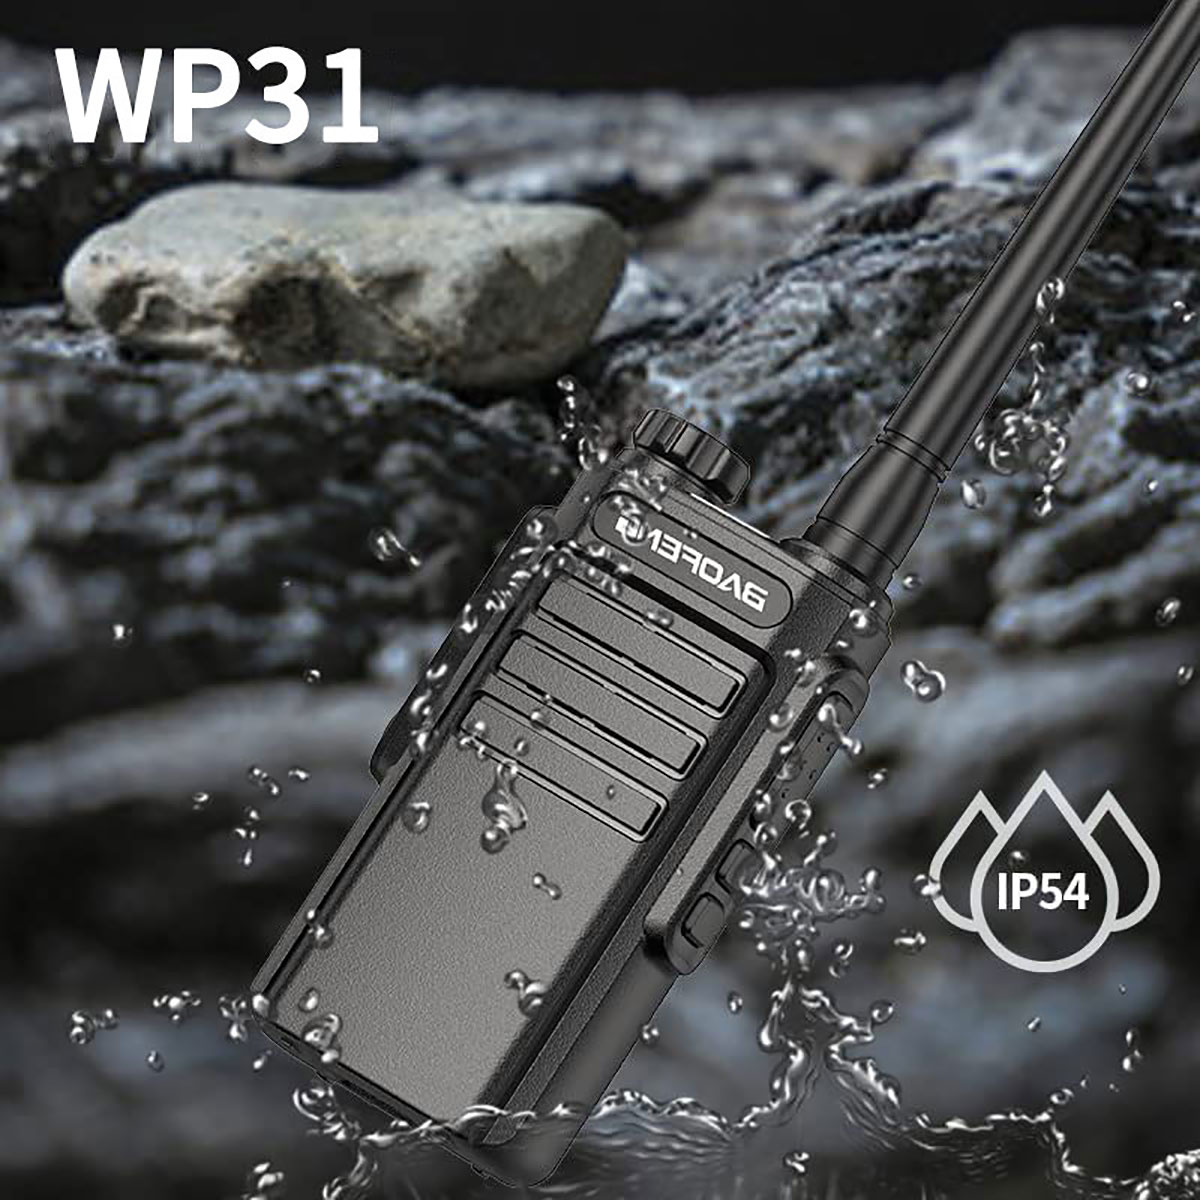 Baofeng WP31 Waterproof Walkie Talkie Long Range Two-way Radio